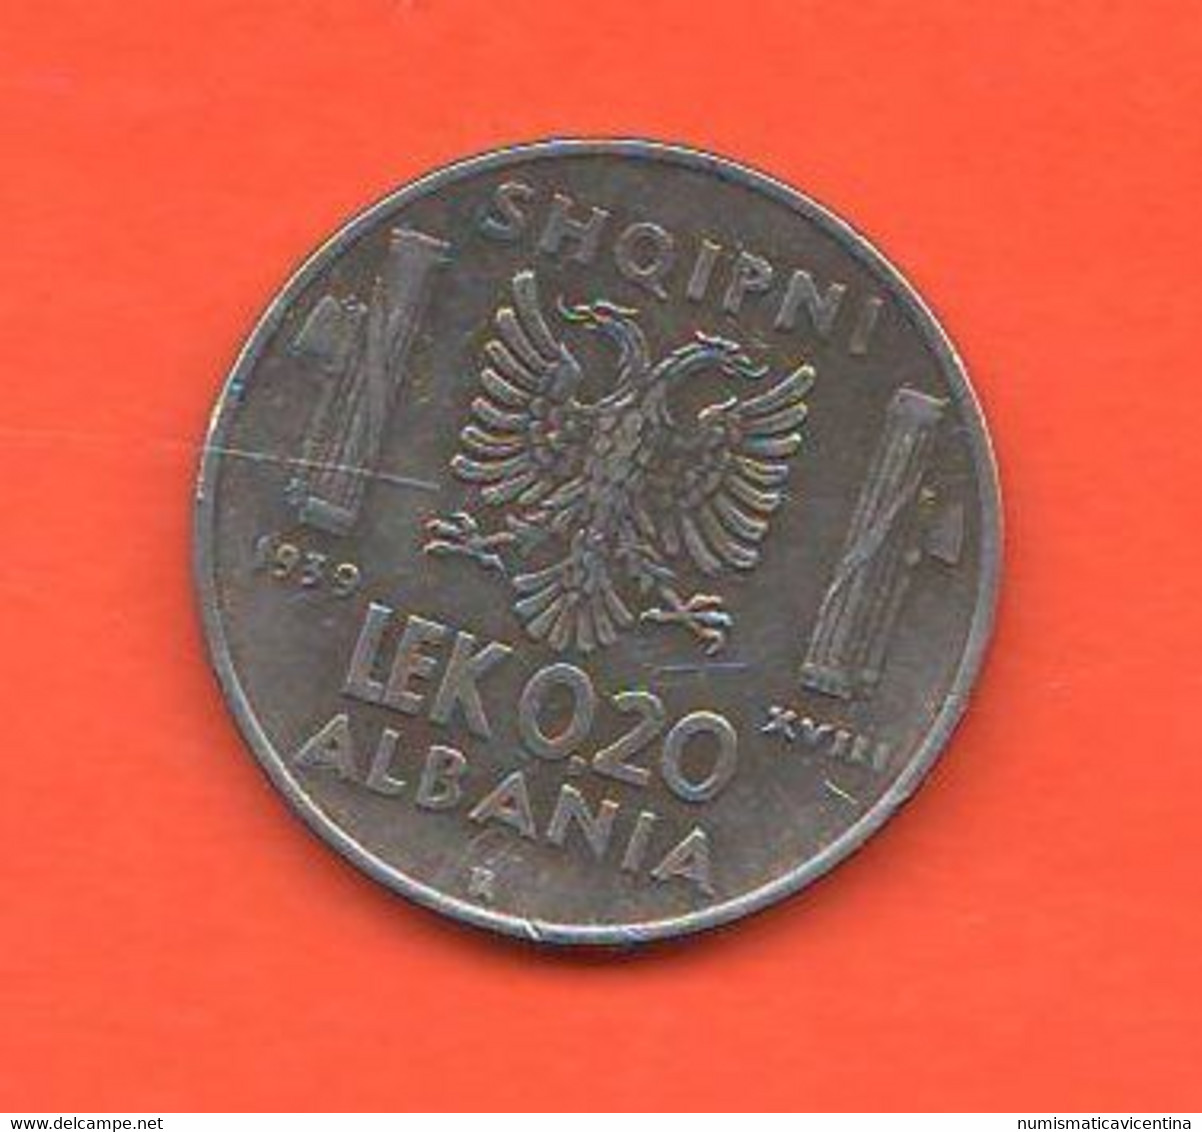 Albania 0,20 Lek 1939 Albanie Shqipni Steel Coin - Albania